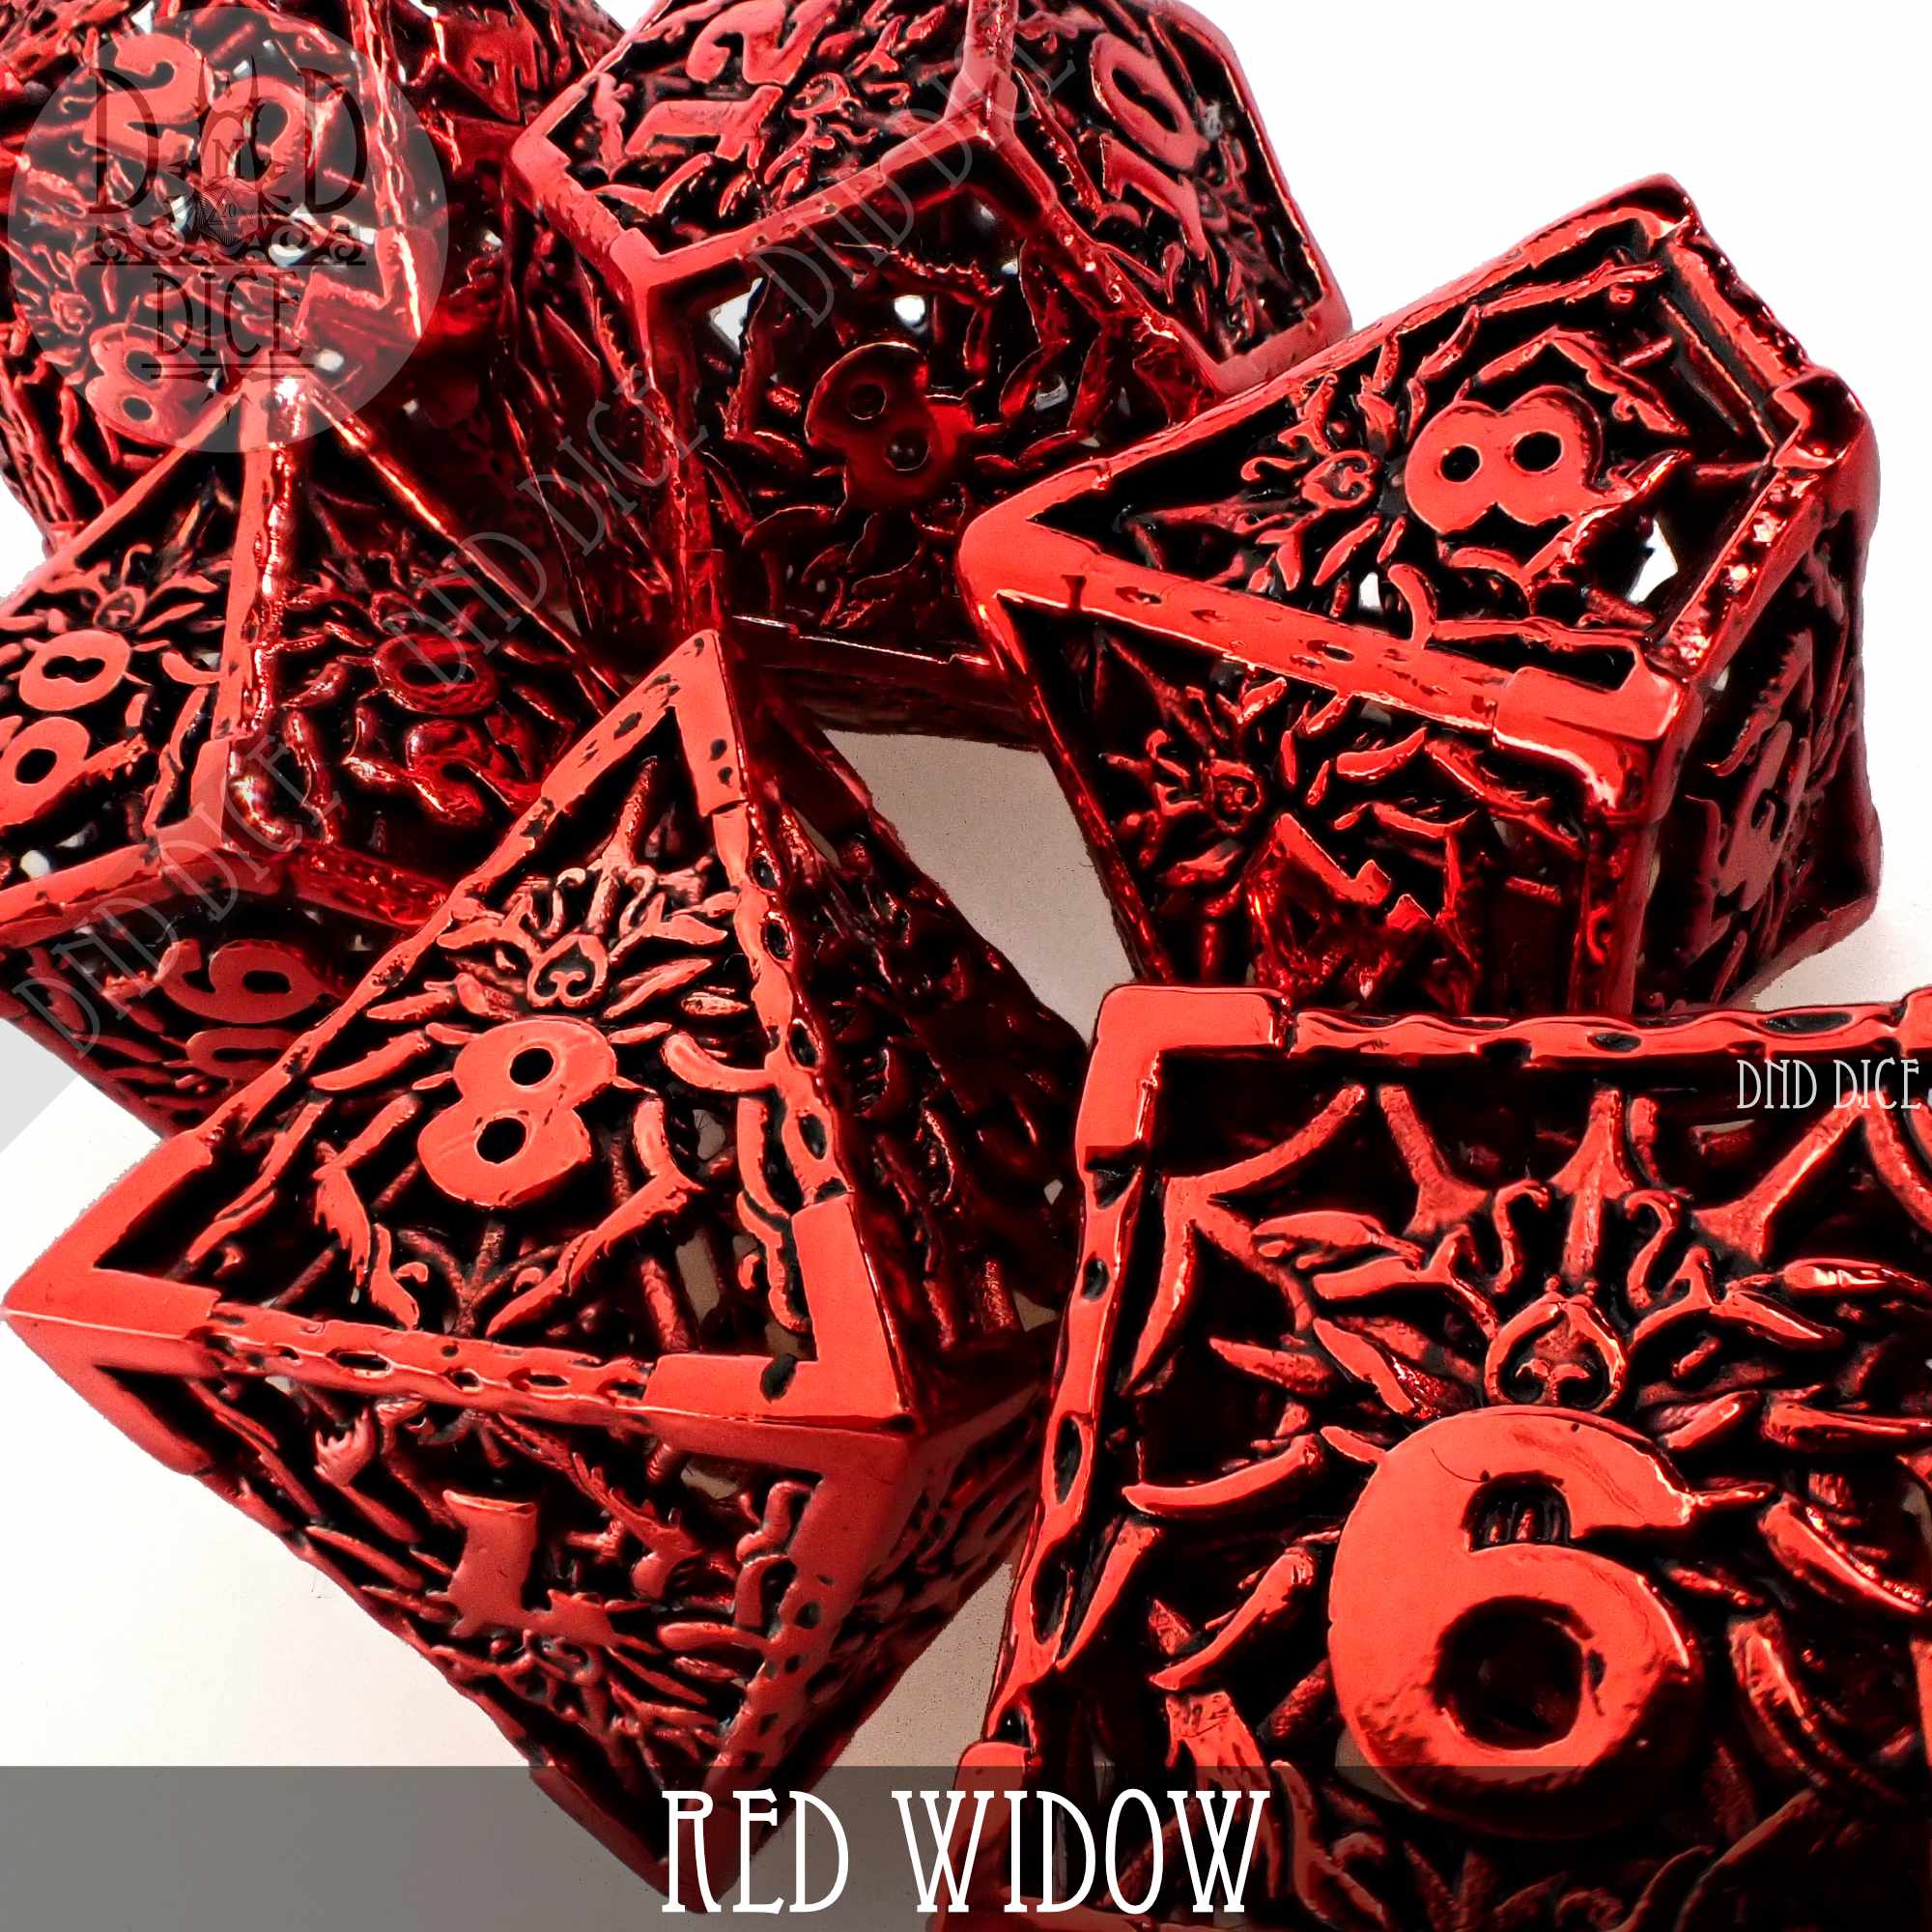 Red Widow Hollow Metal Dice Set (Gift Box)